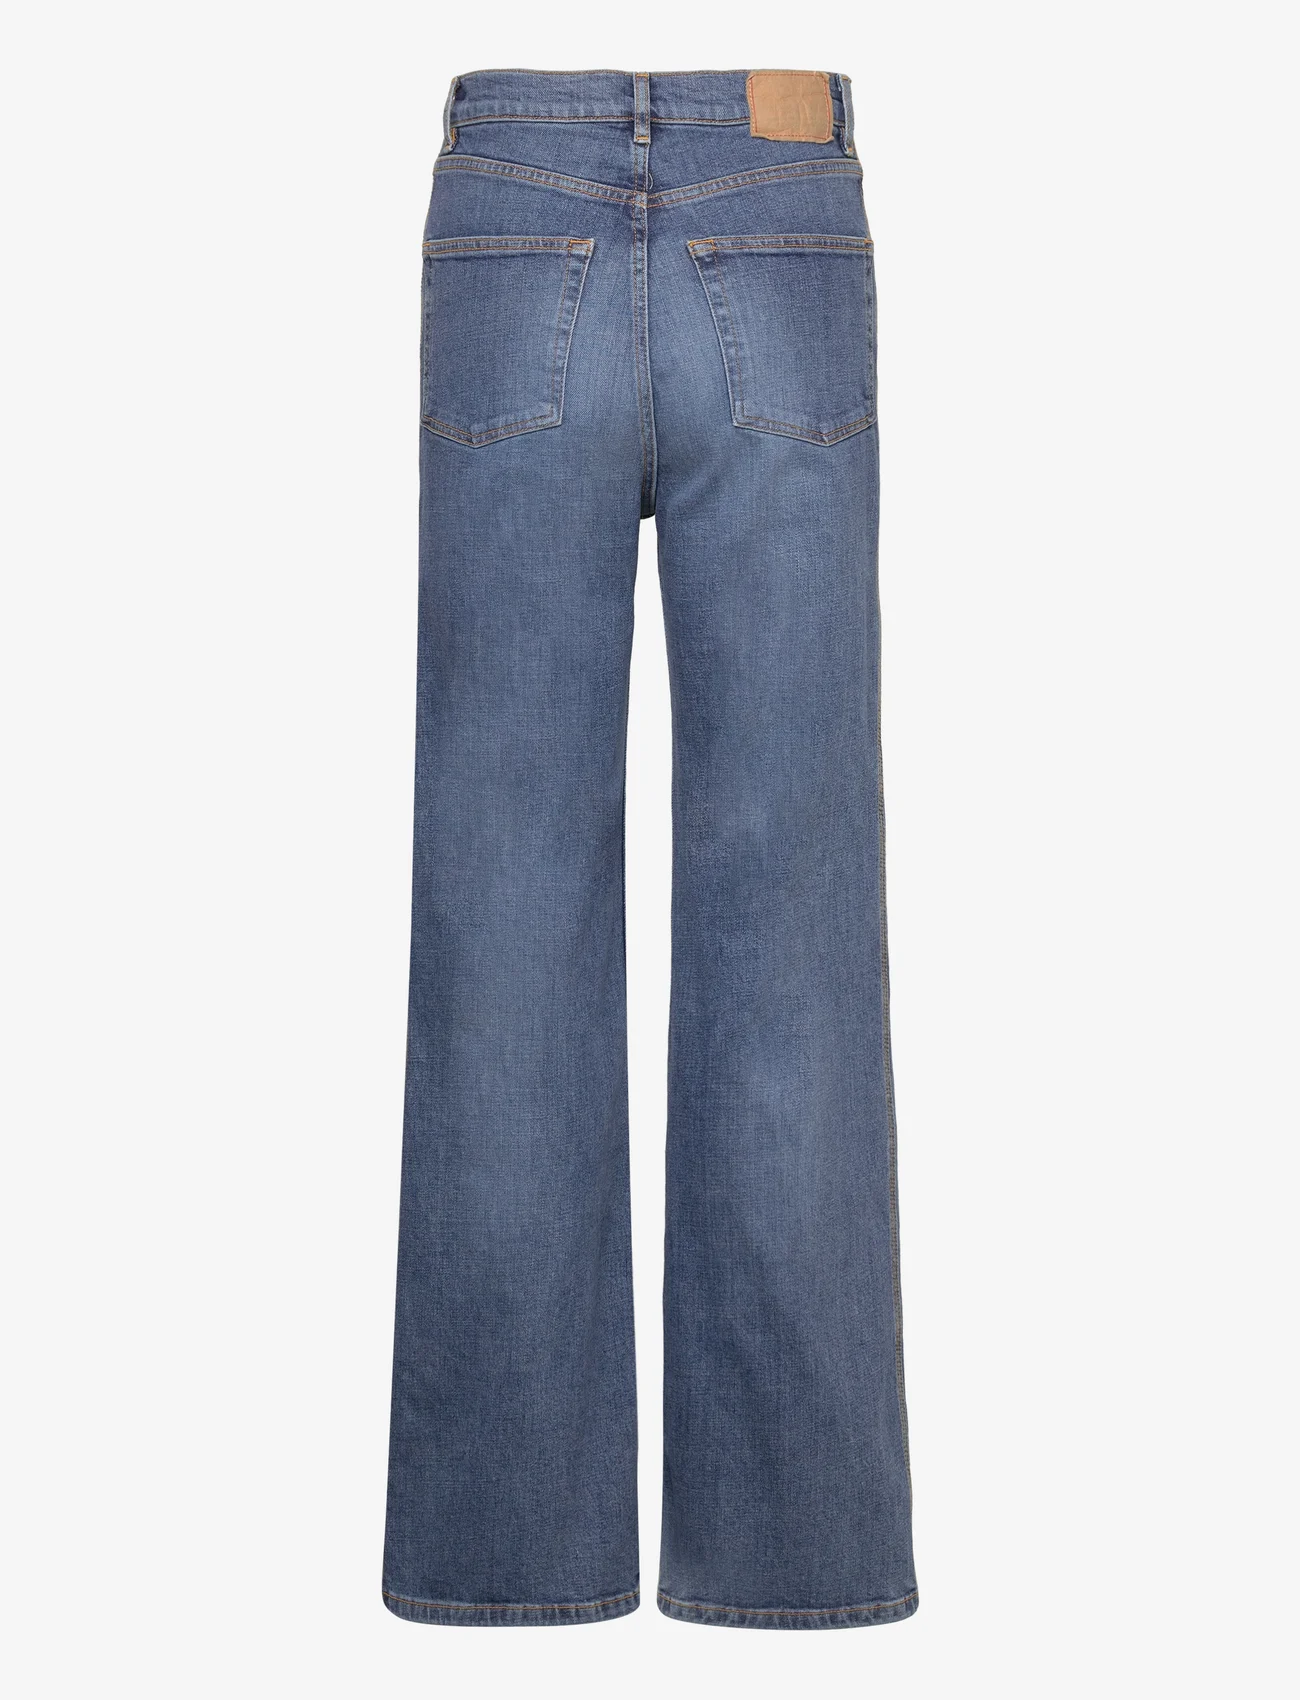 Jeanerica - TW015 Trevi - flared jeans - vintage 62 - 1